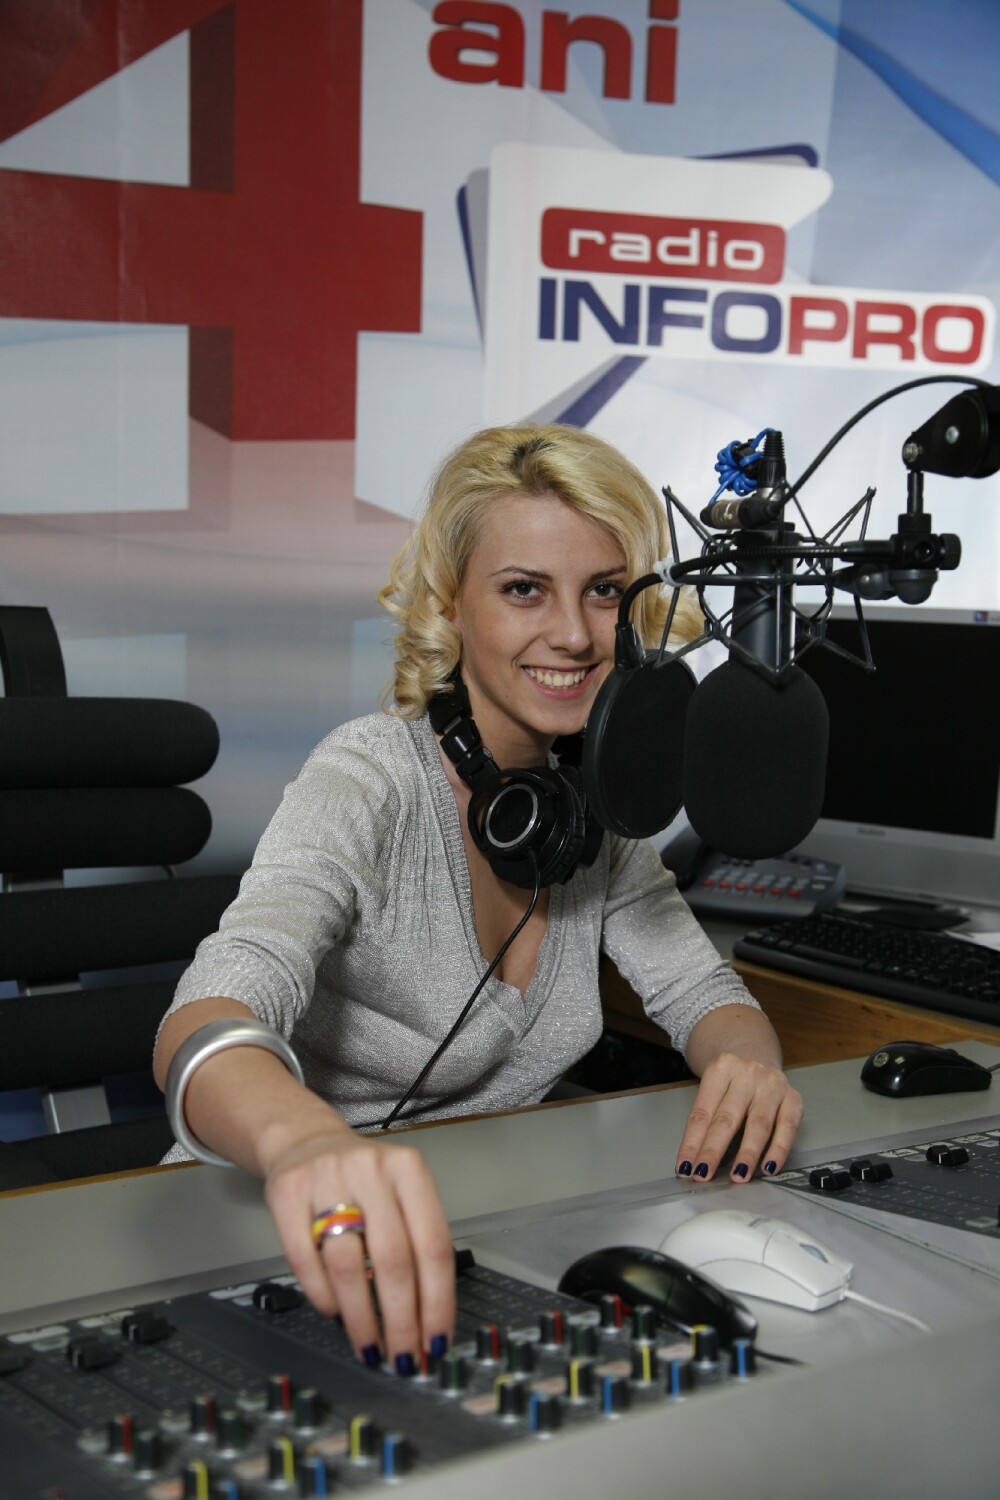 Alina Plugaru vrea sa faca un top al pozitiilor sexuale la Radio InfoPro! - Imaginea 2